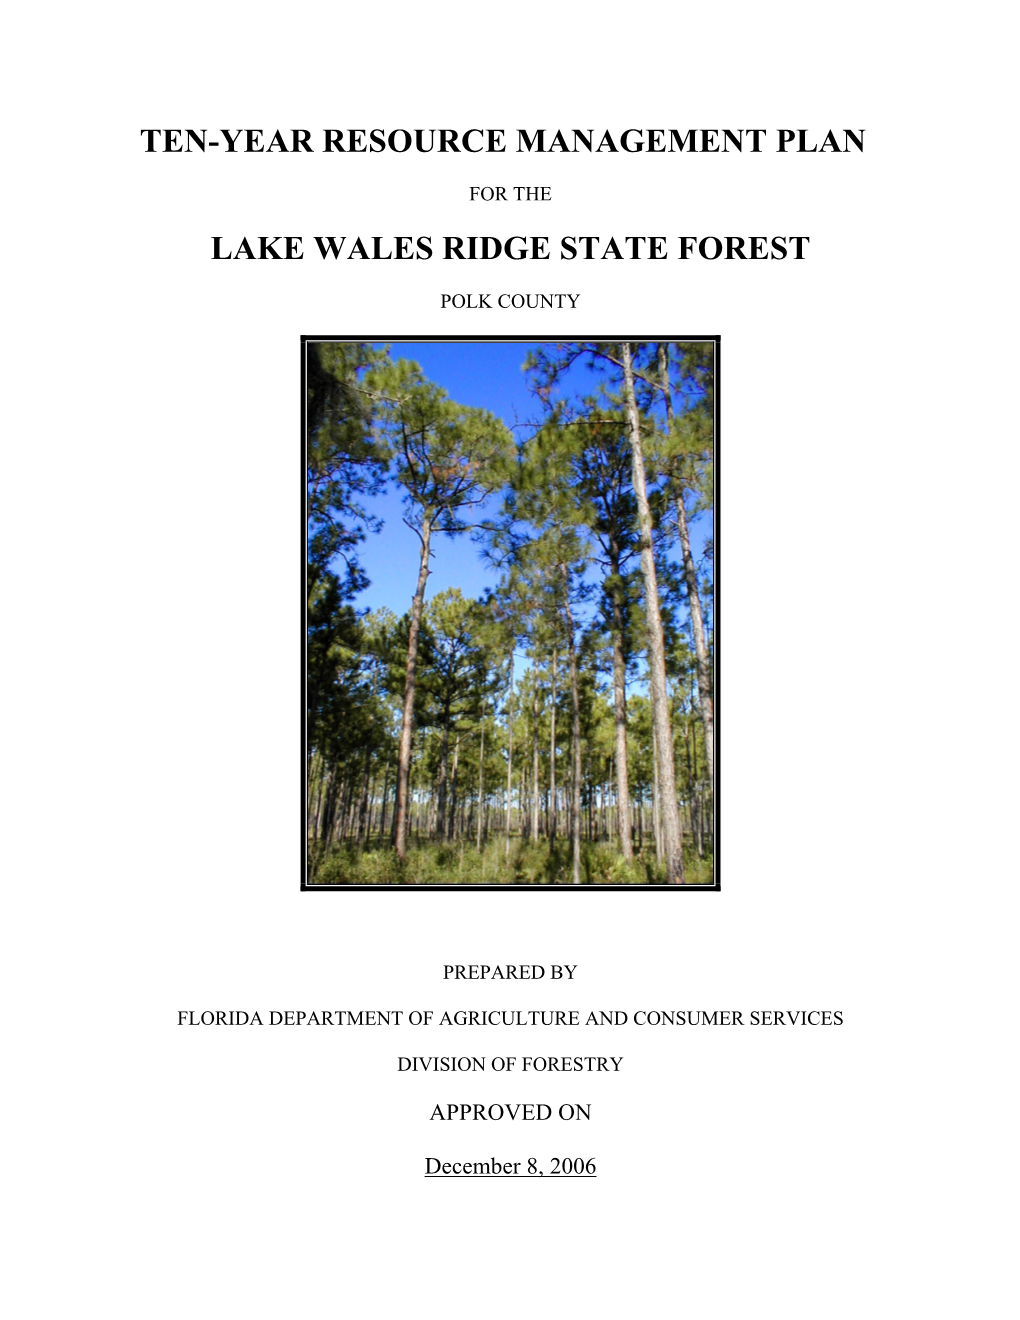 Lake Wales Ridge State Forest